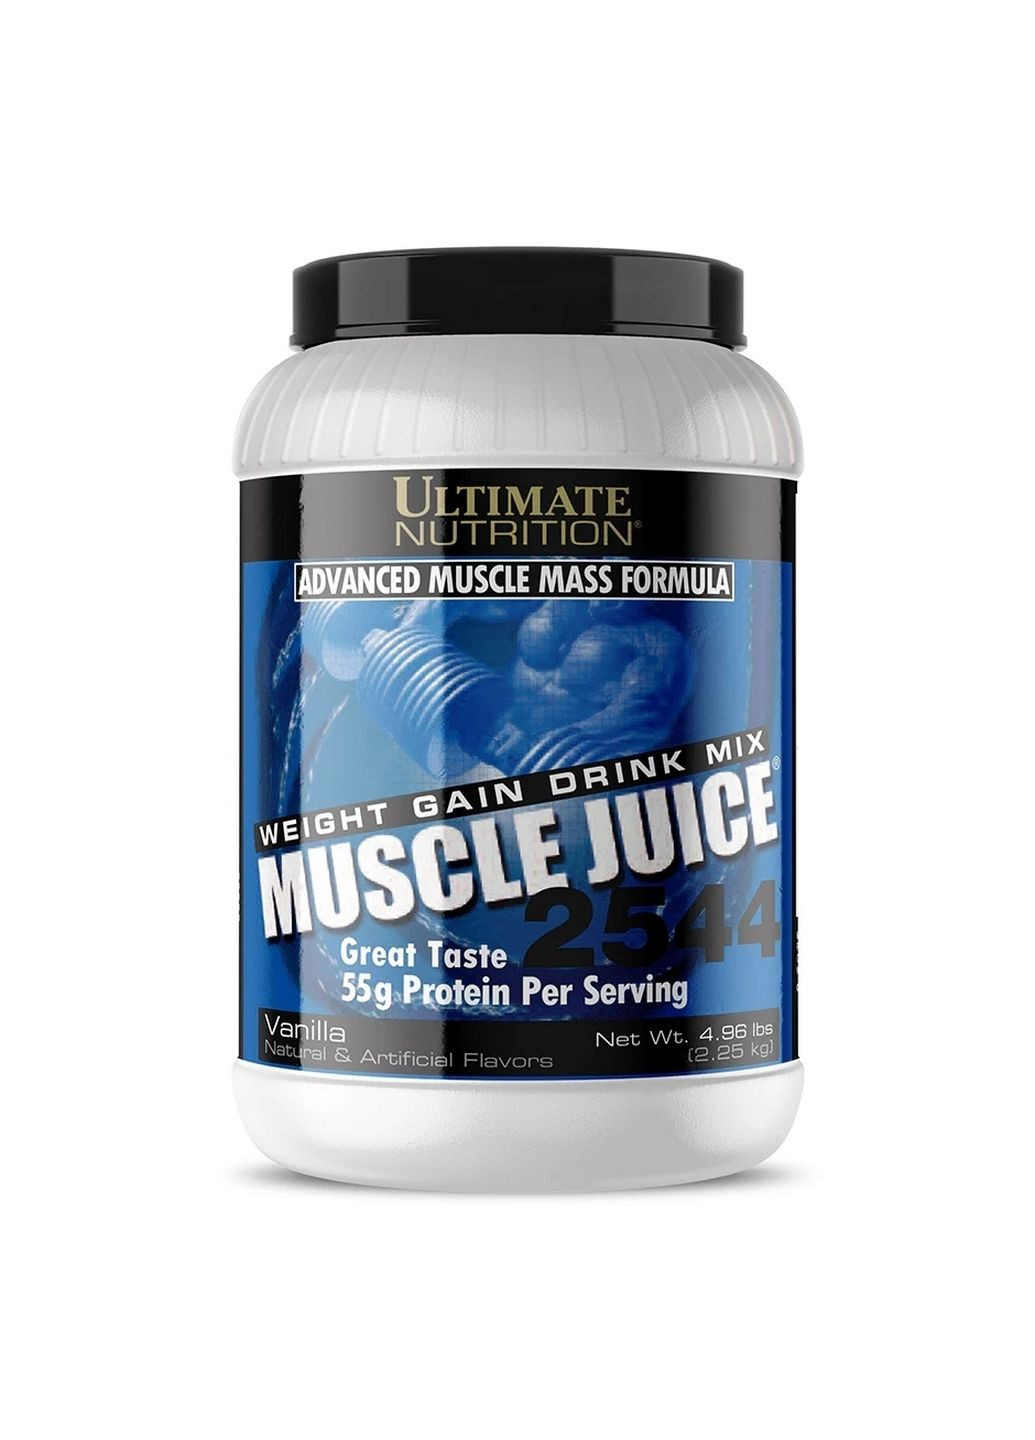 Гейнер Ultimate Muscle Juice 2544, 2.25 кг Ваниль Ultimate Nutrition (293478176)